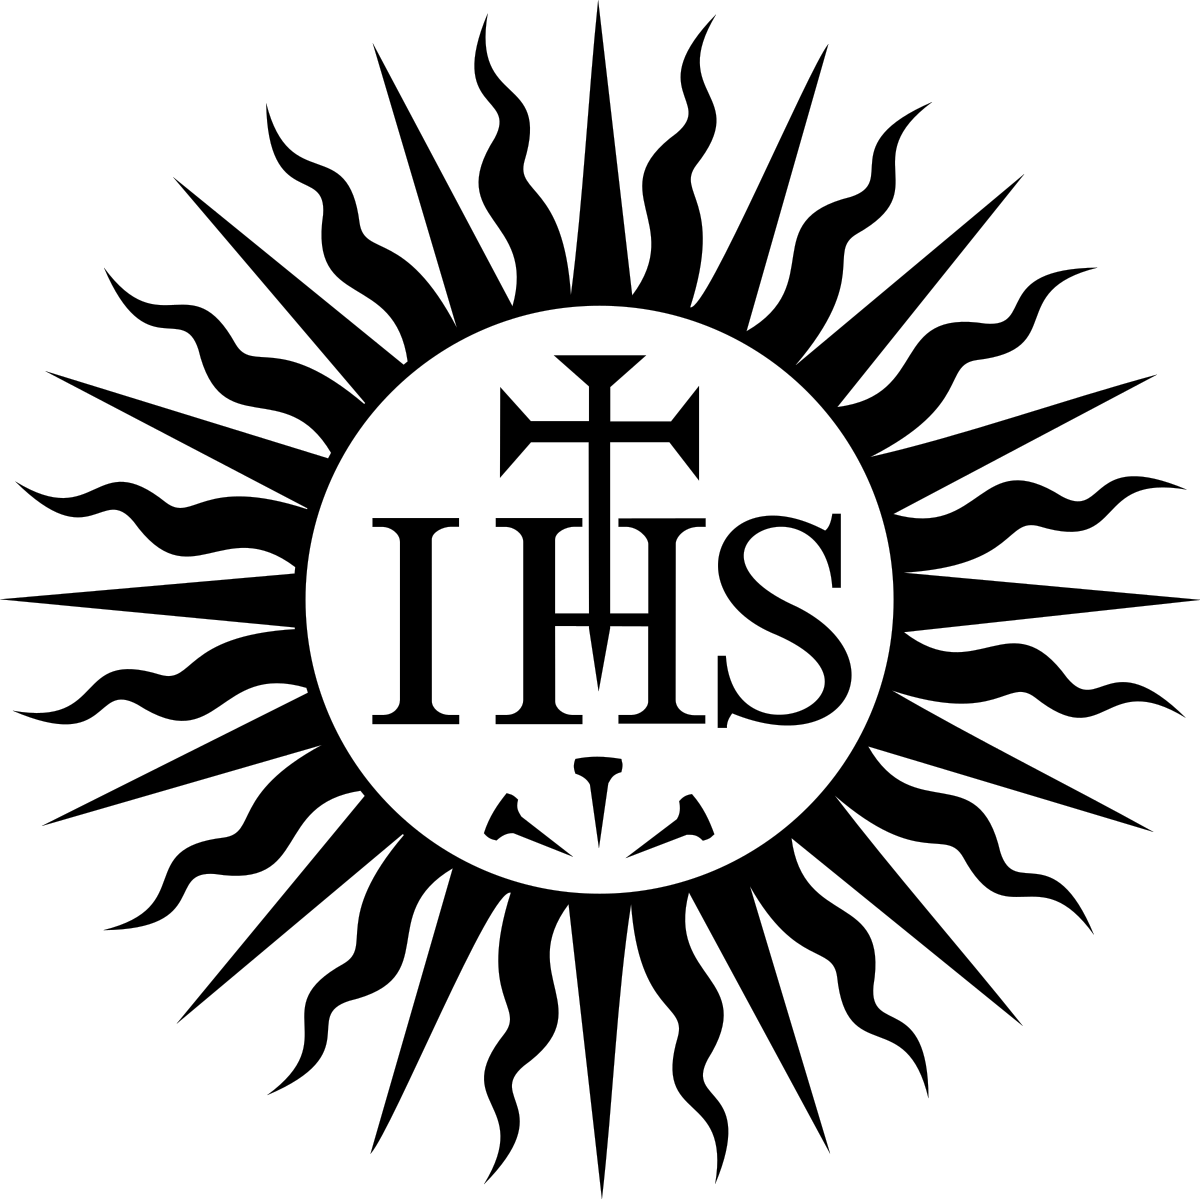 Society of Jesus - Wikipedia